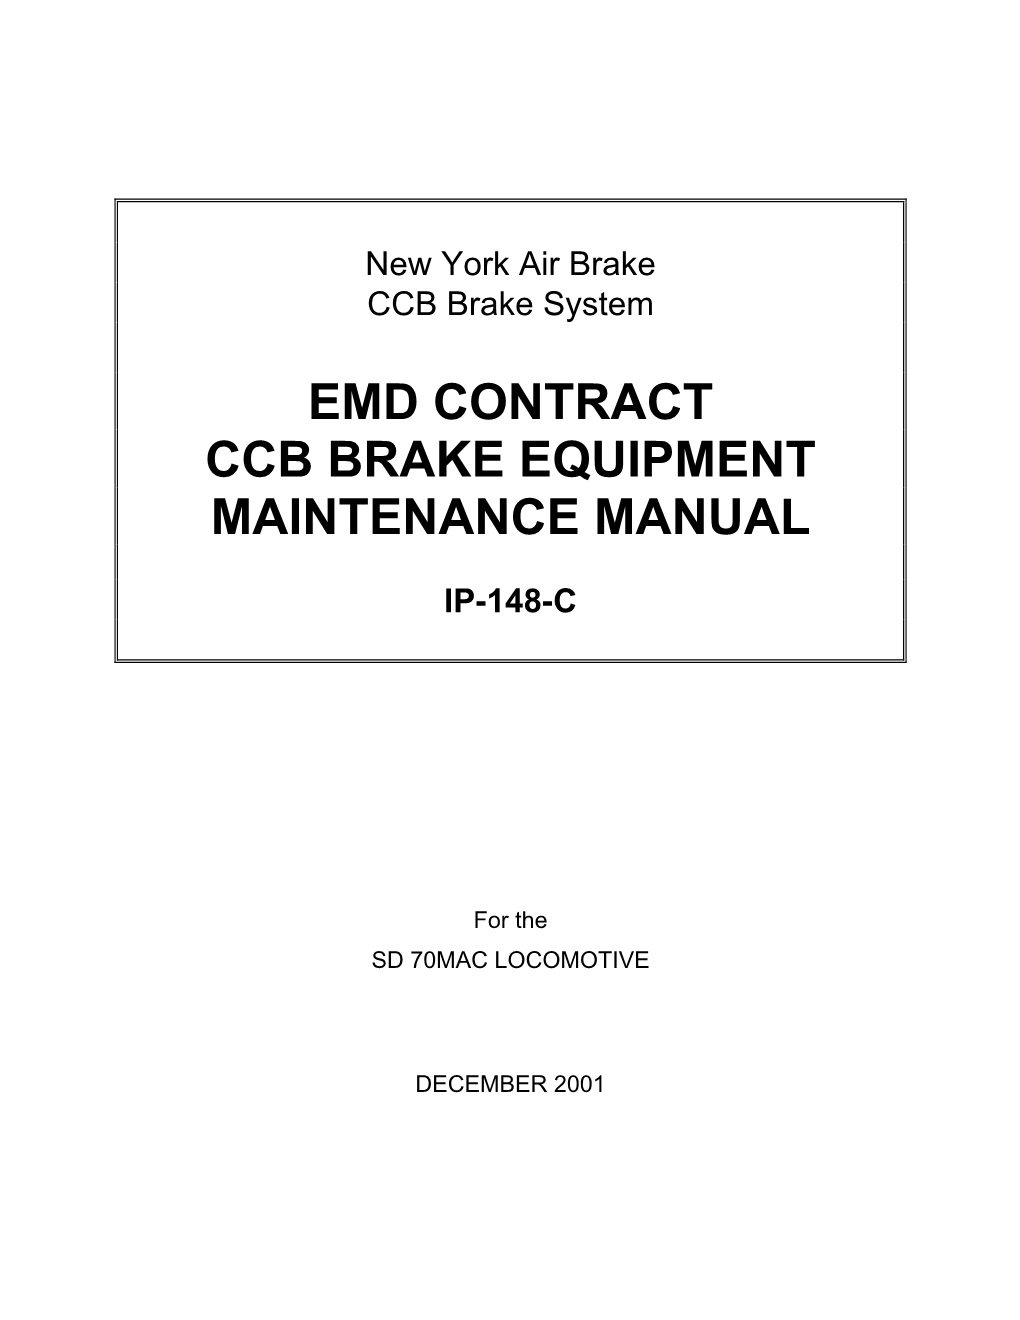 Emd Contract Ccb Brake Equipment Maintenance Manual